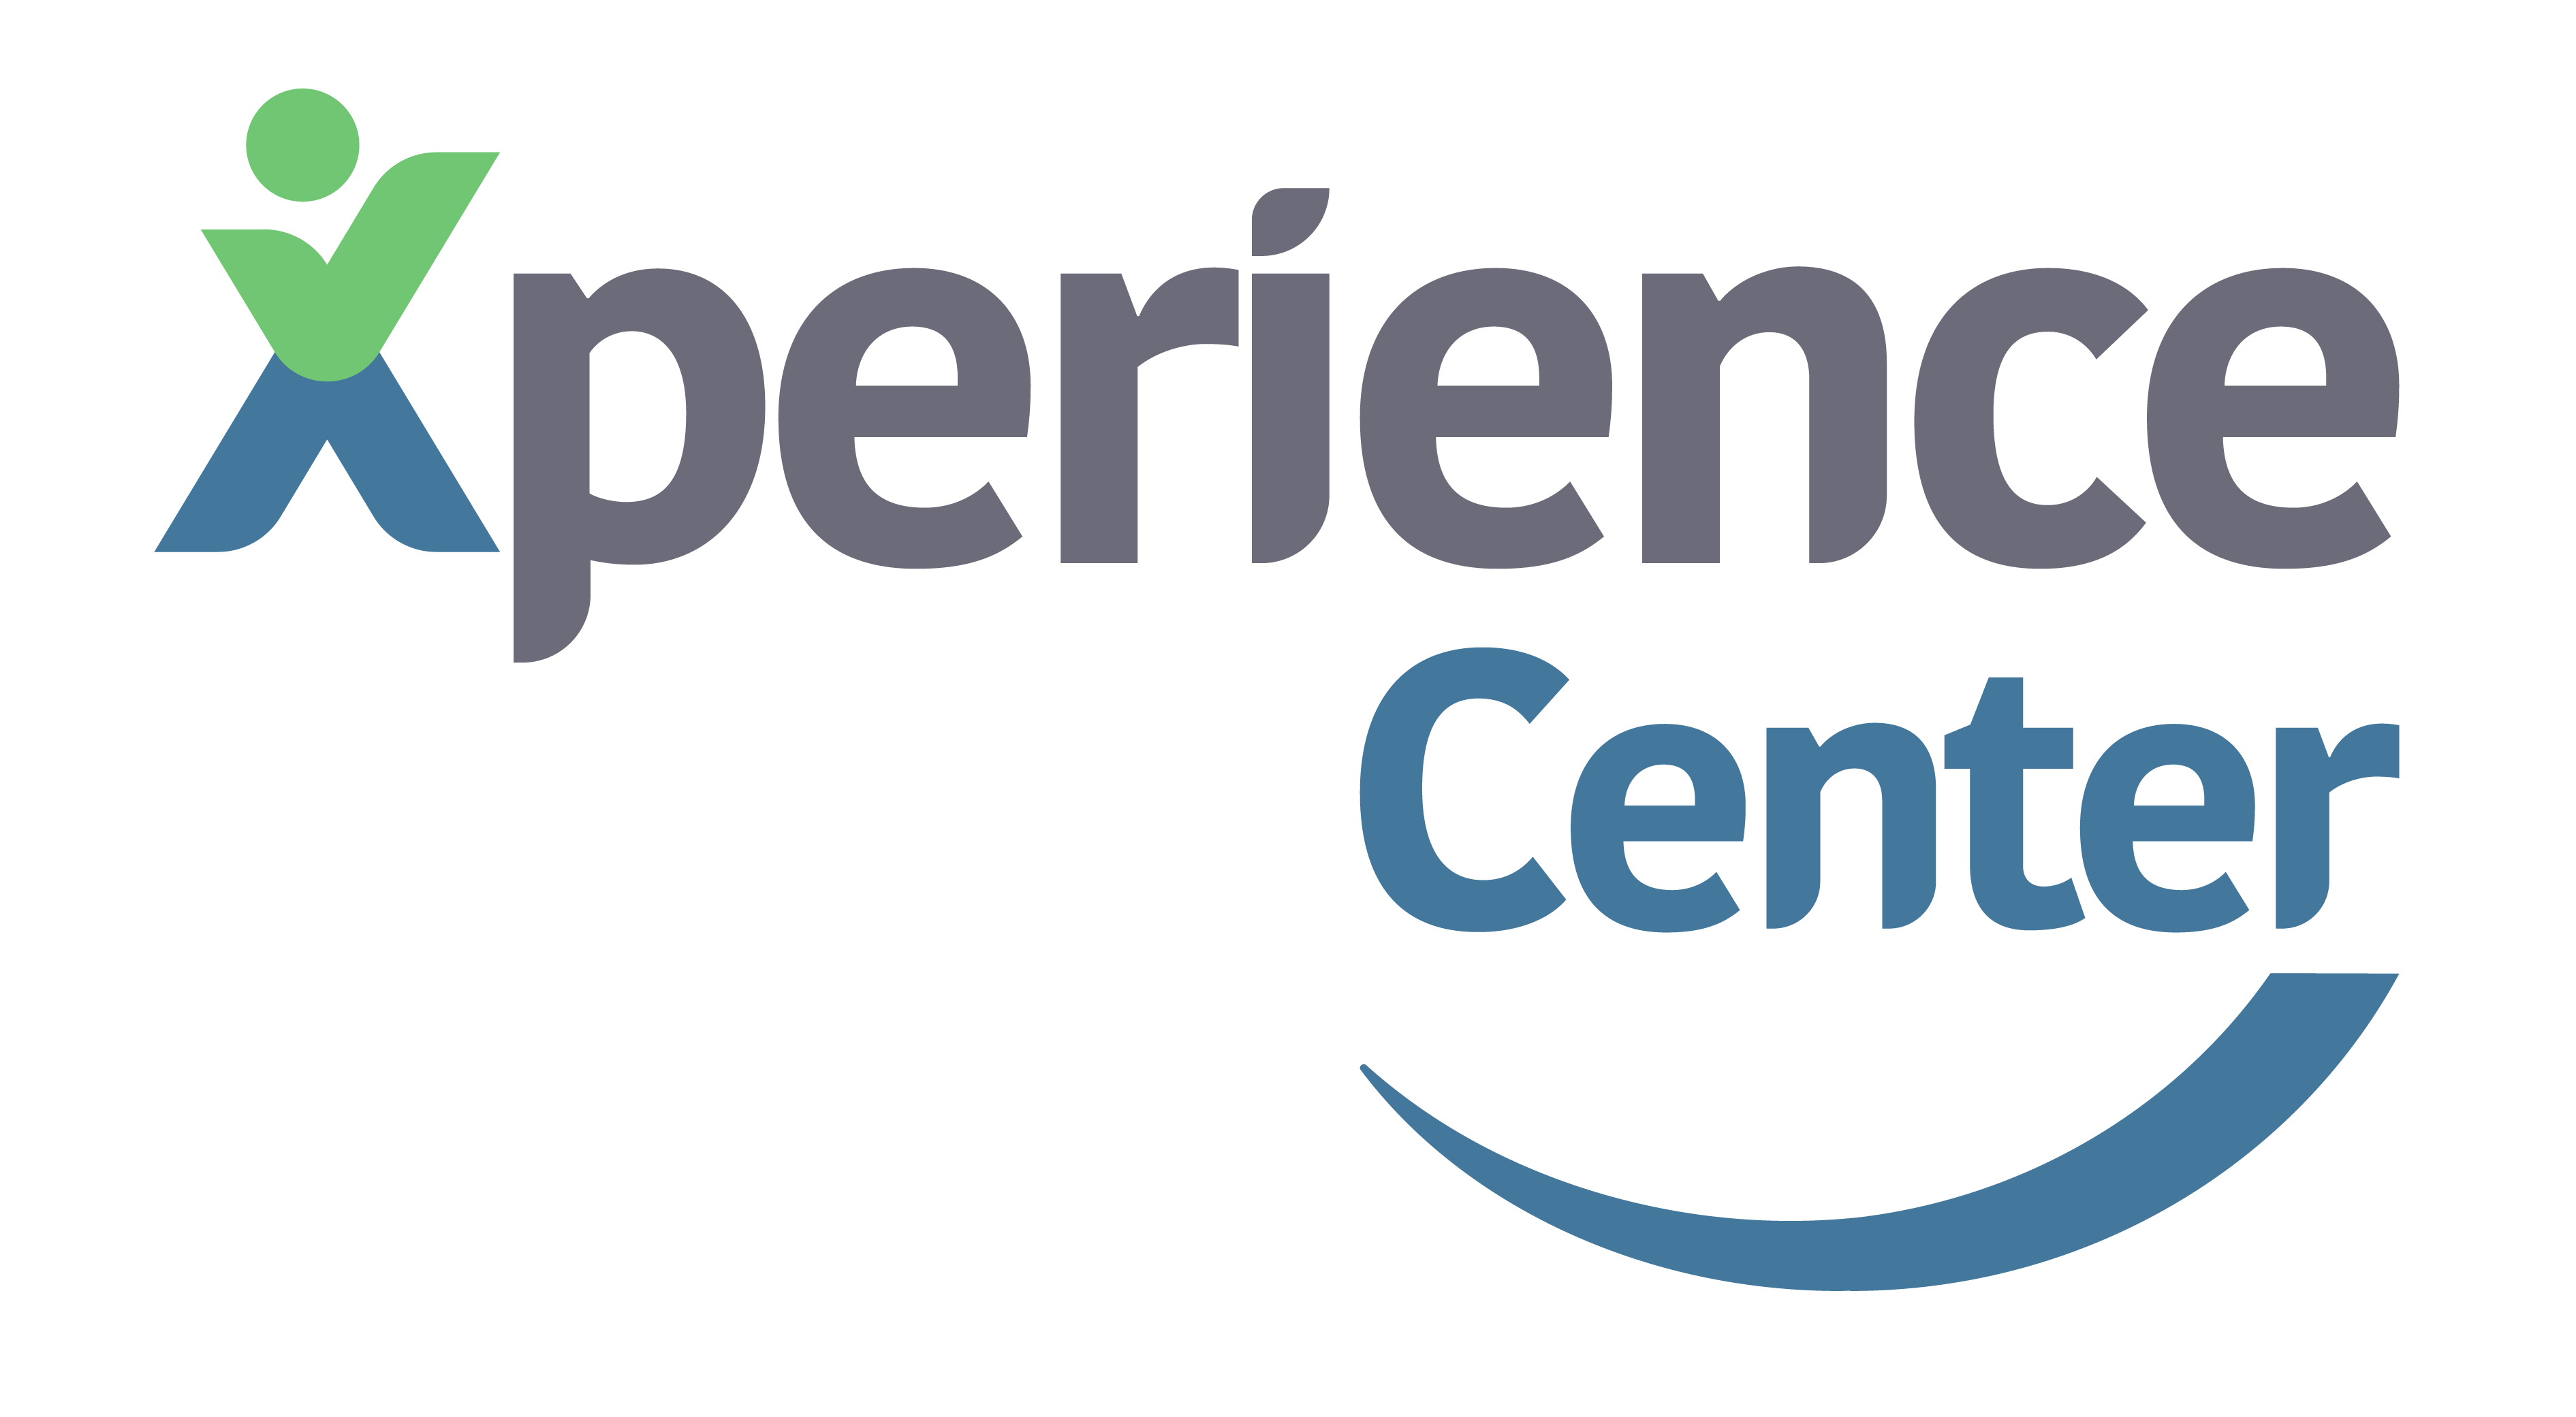 Centro de Experiencia